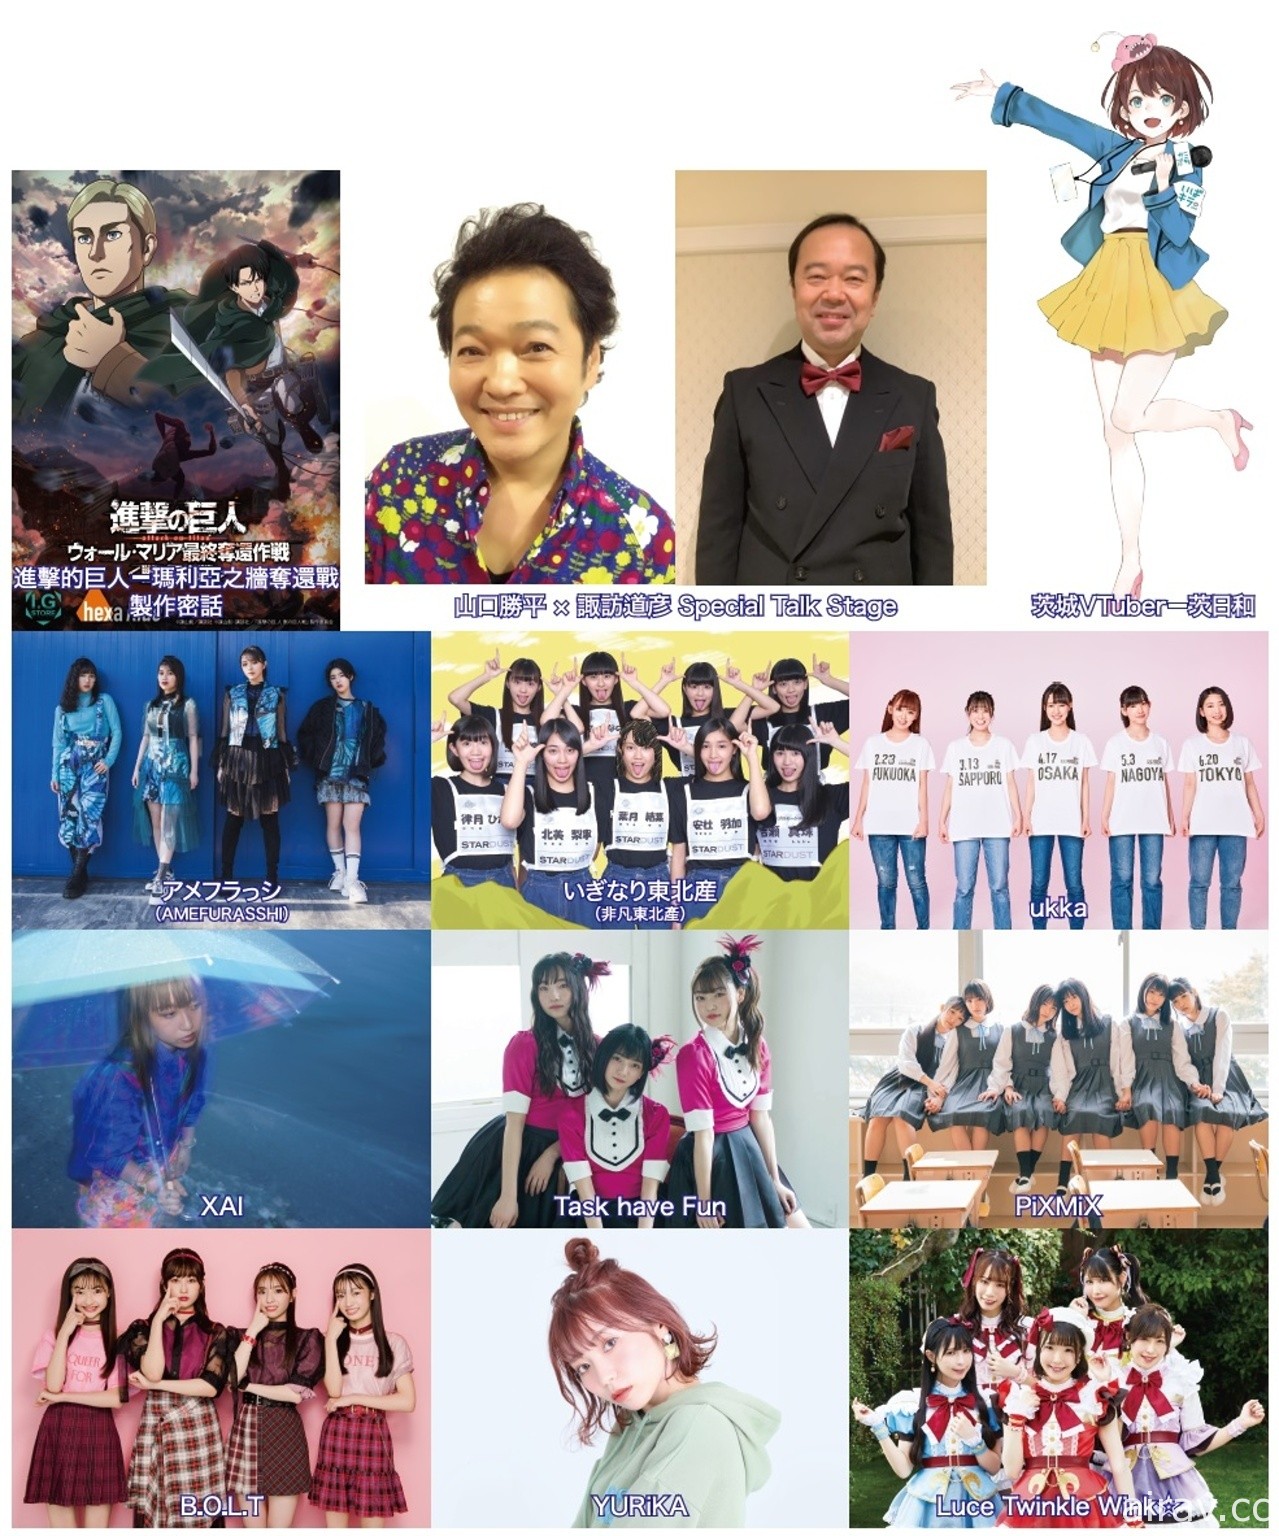 【TiCA21】ICHIBAN JAPAN 日本館 將邀多組歌手及動畫製作人連線舉辦活動